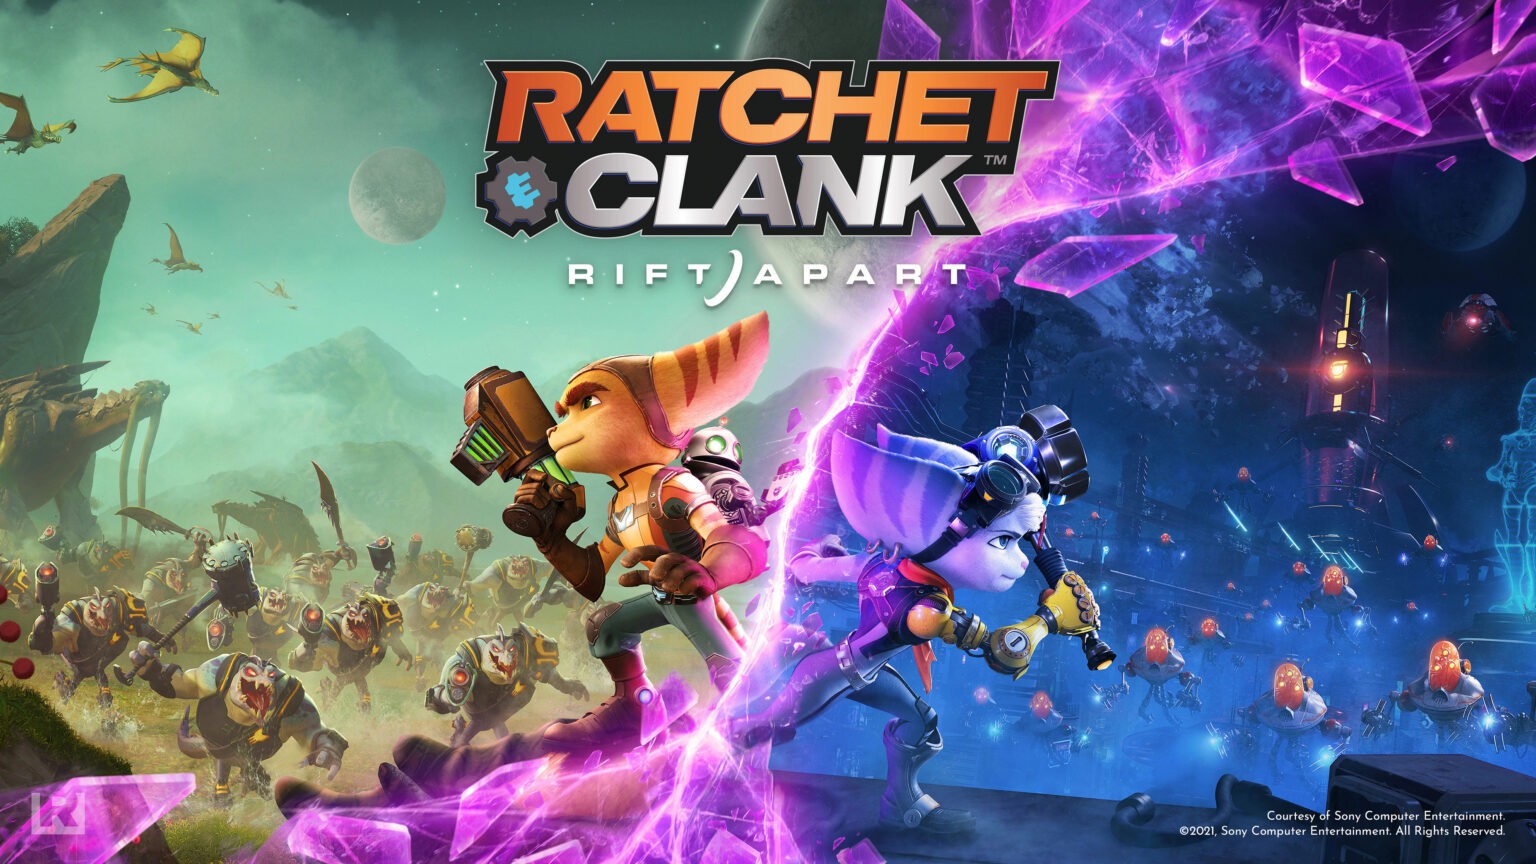 Ratchet-rift-apart-1536x864.jpg